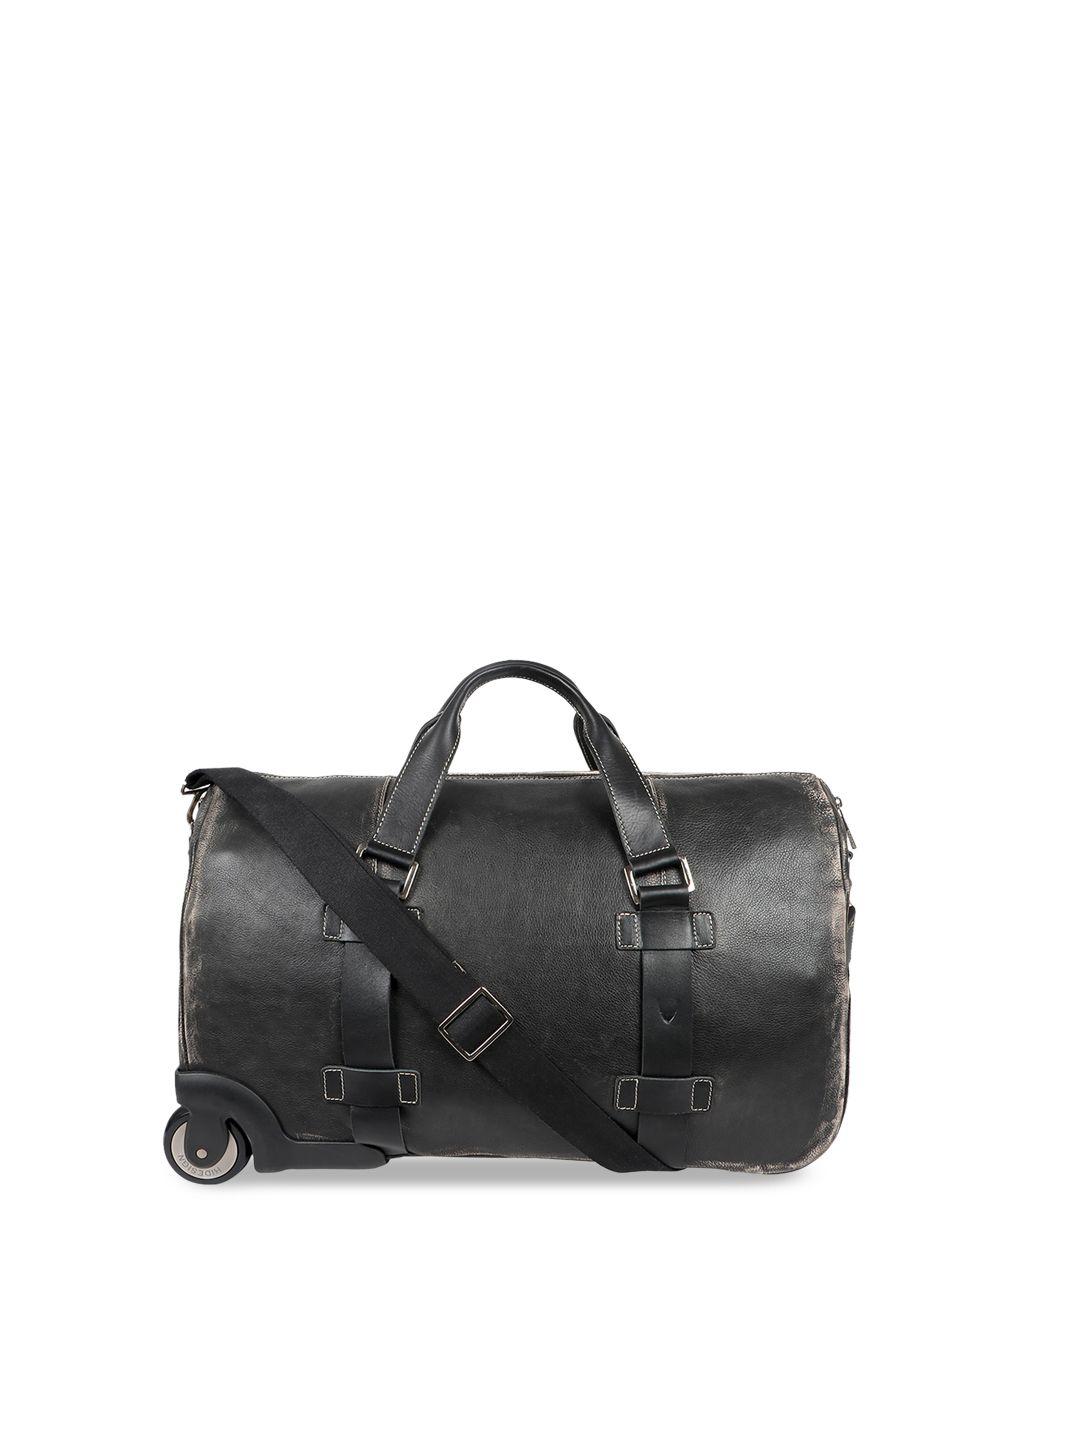 hidesign-men-black-solid-leather-medium-duffel-bag